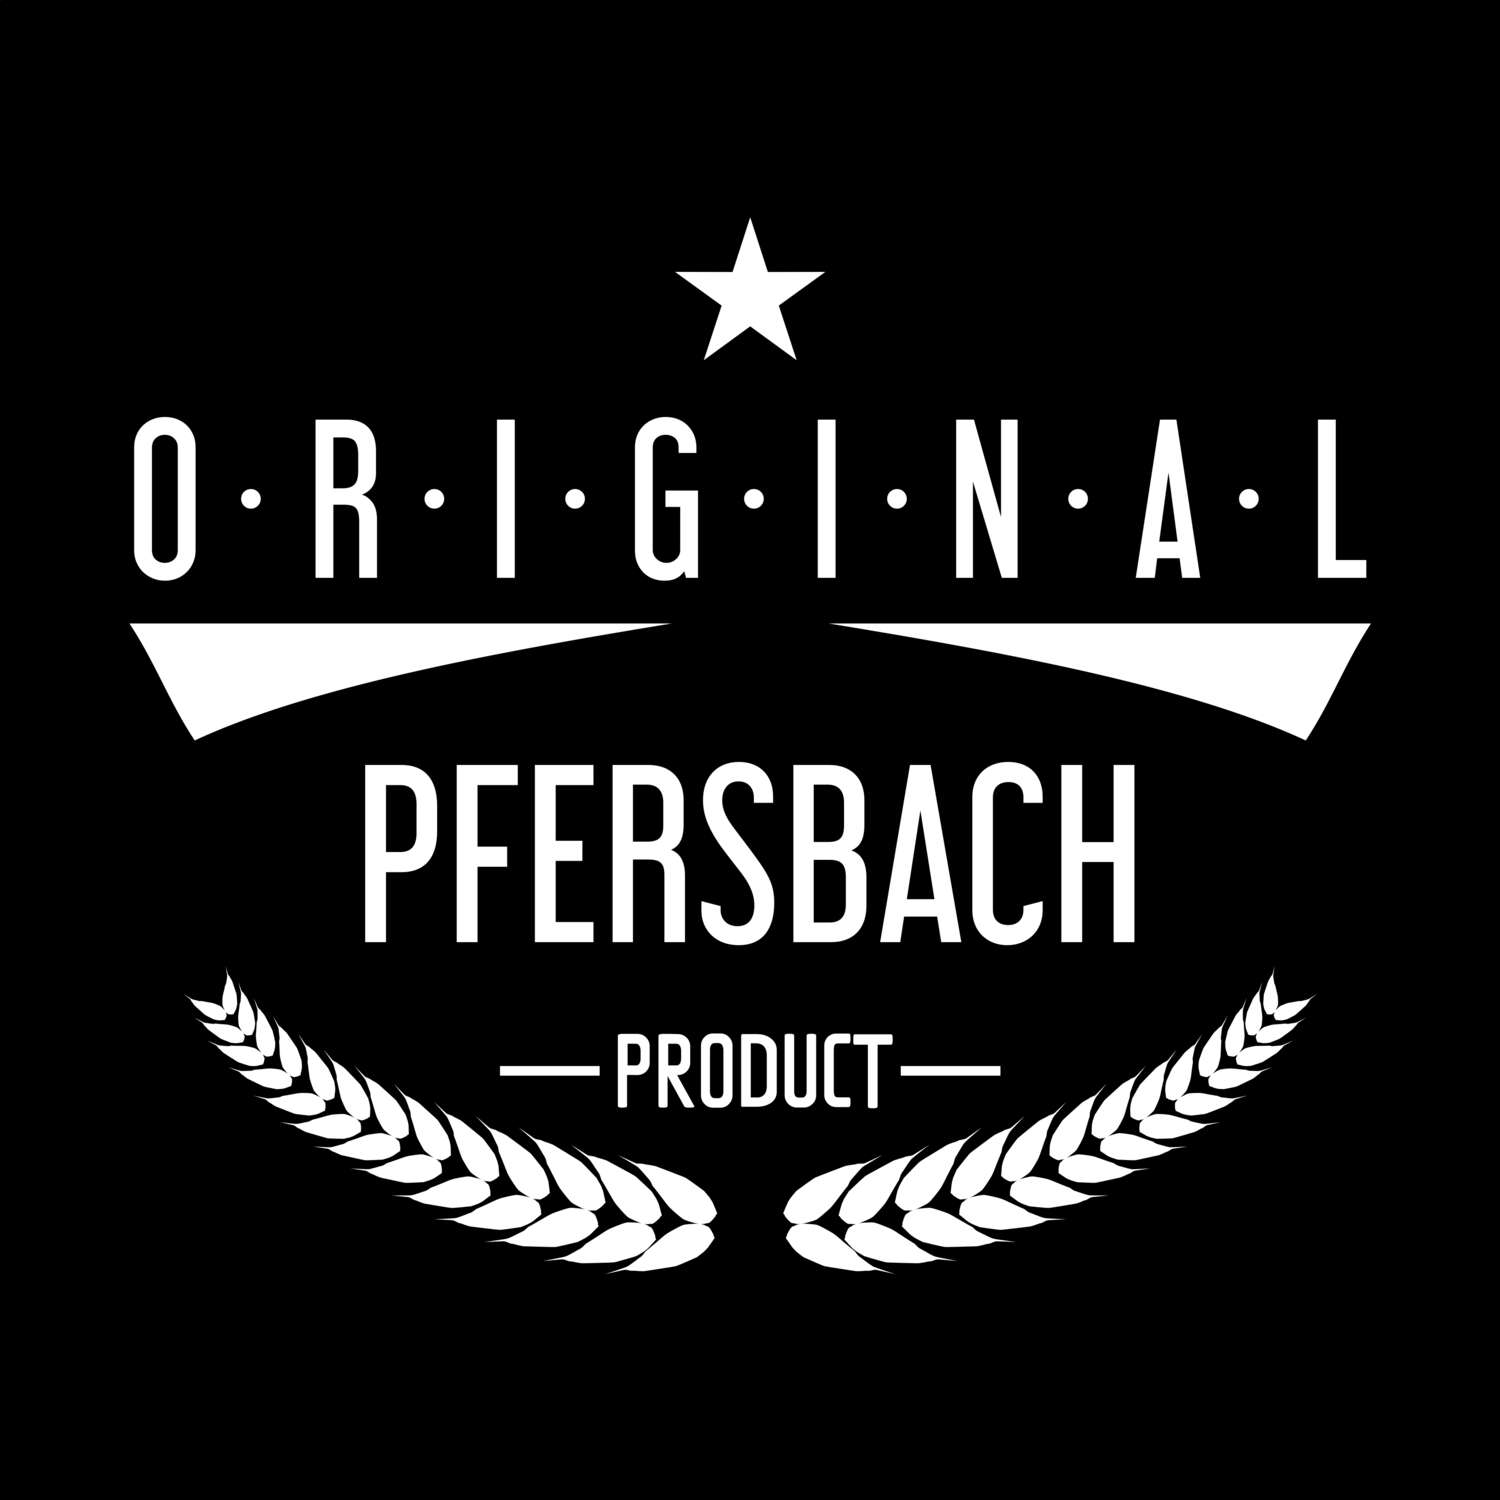 Pfersbach T-Shirt »Original Product«